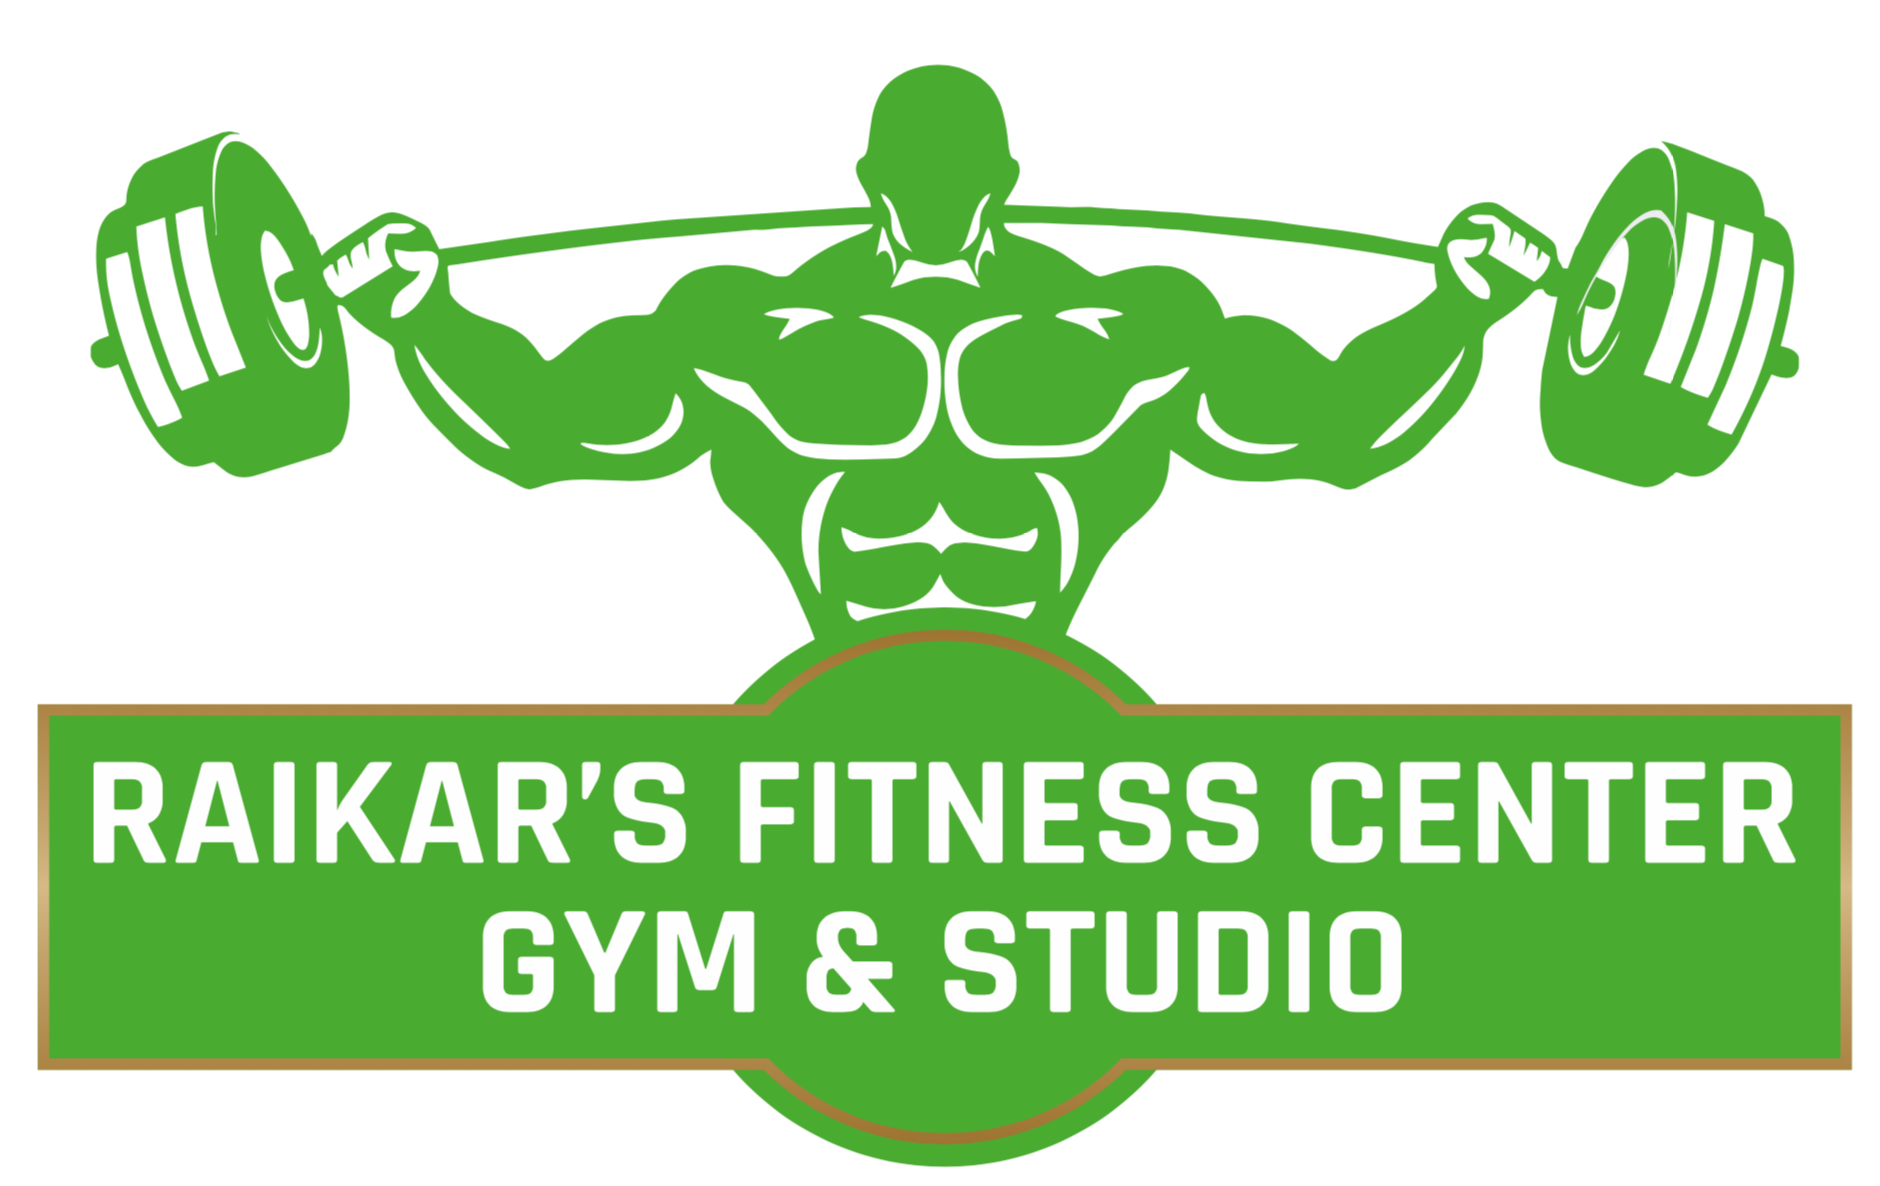 raikars fitness center gym - Logo